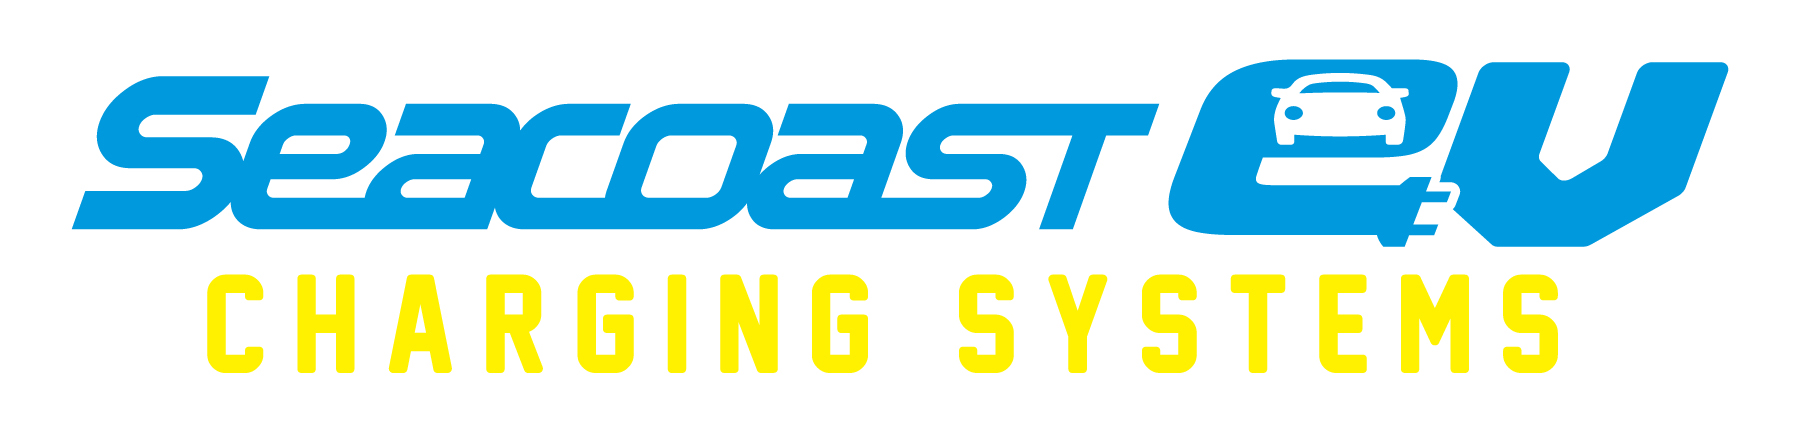 Seacoast EV Charging Solutions Logo